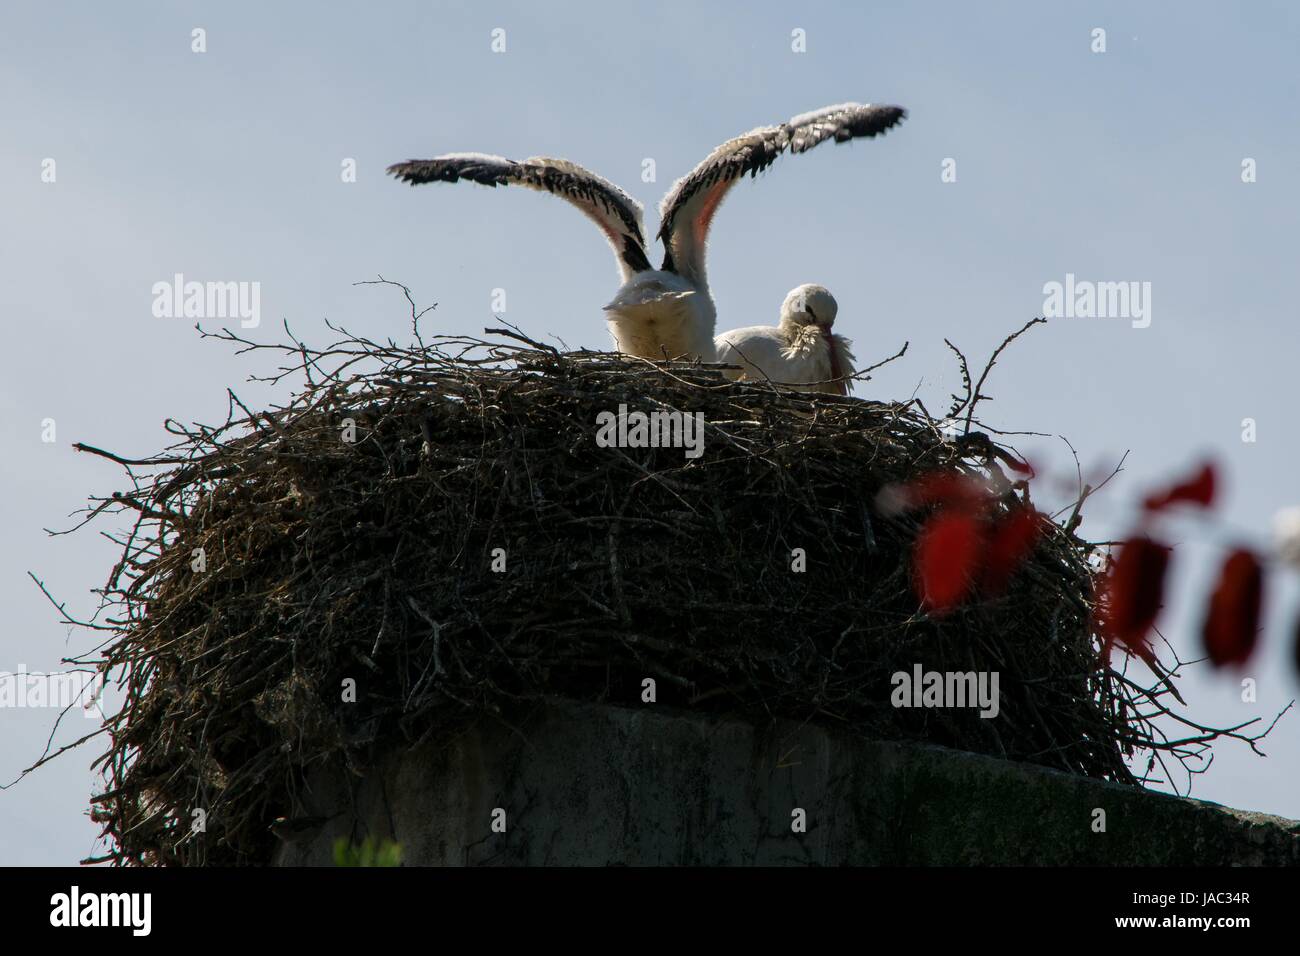 Allwetterzoo Münster, Storch, stork, babys in stork's nest Stock Photo